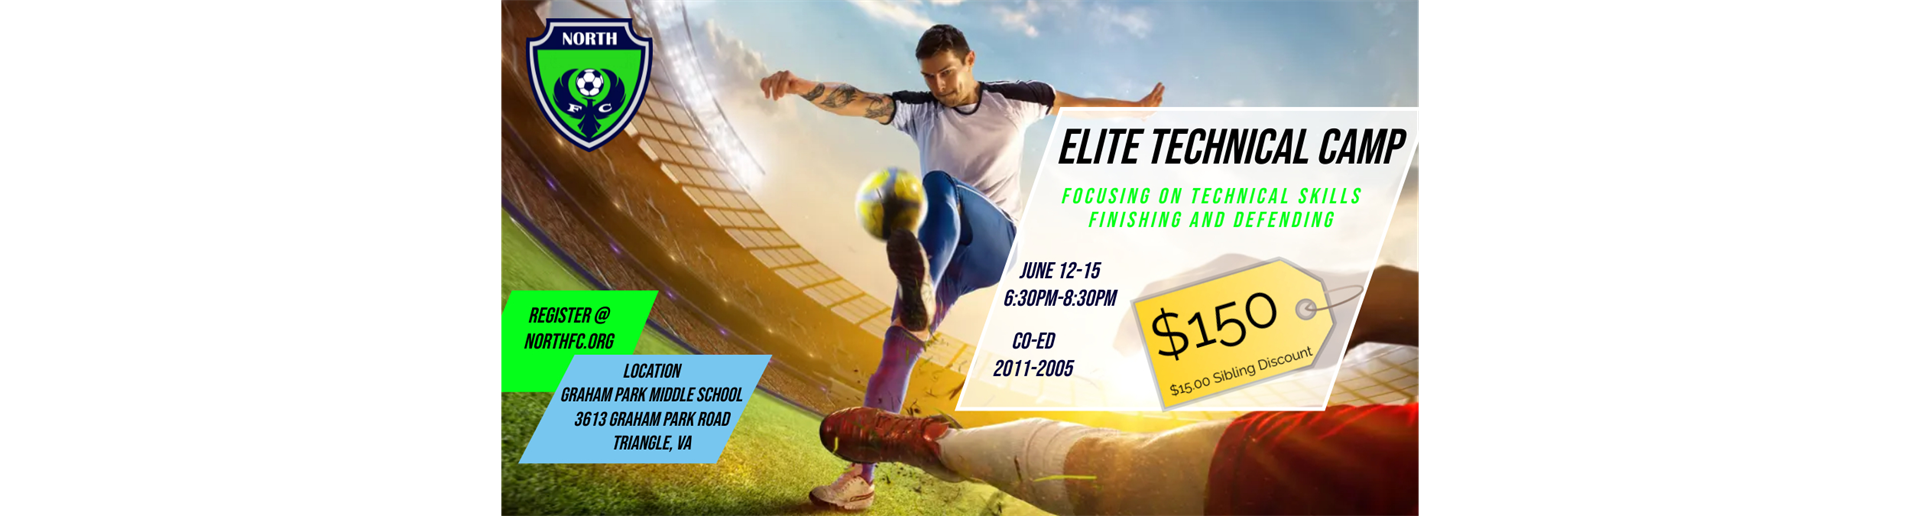 Elite Technical Camp - Register NOW